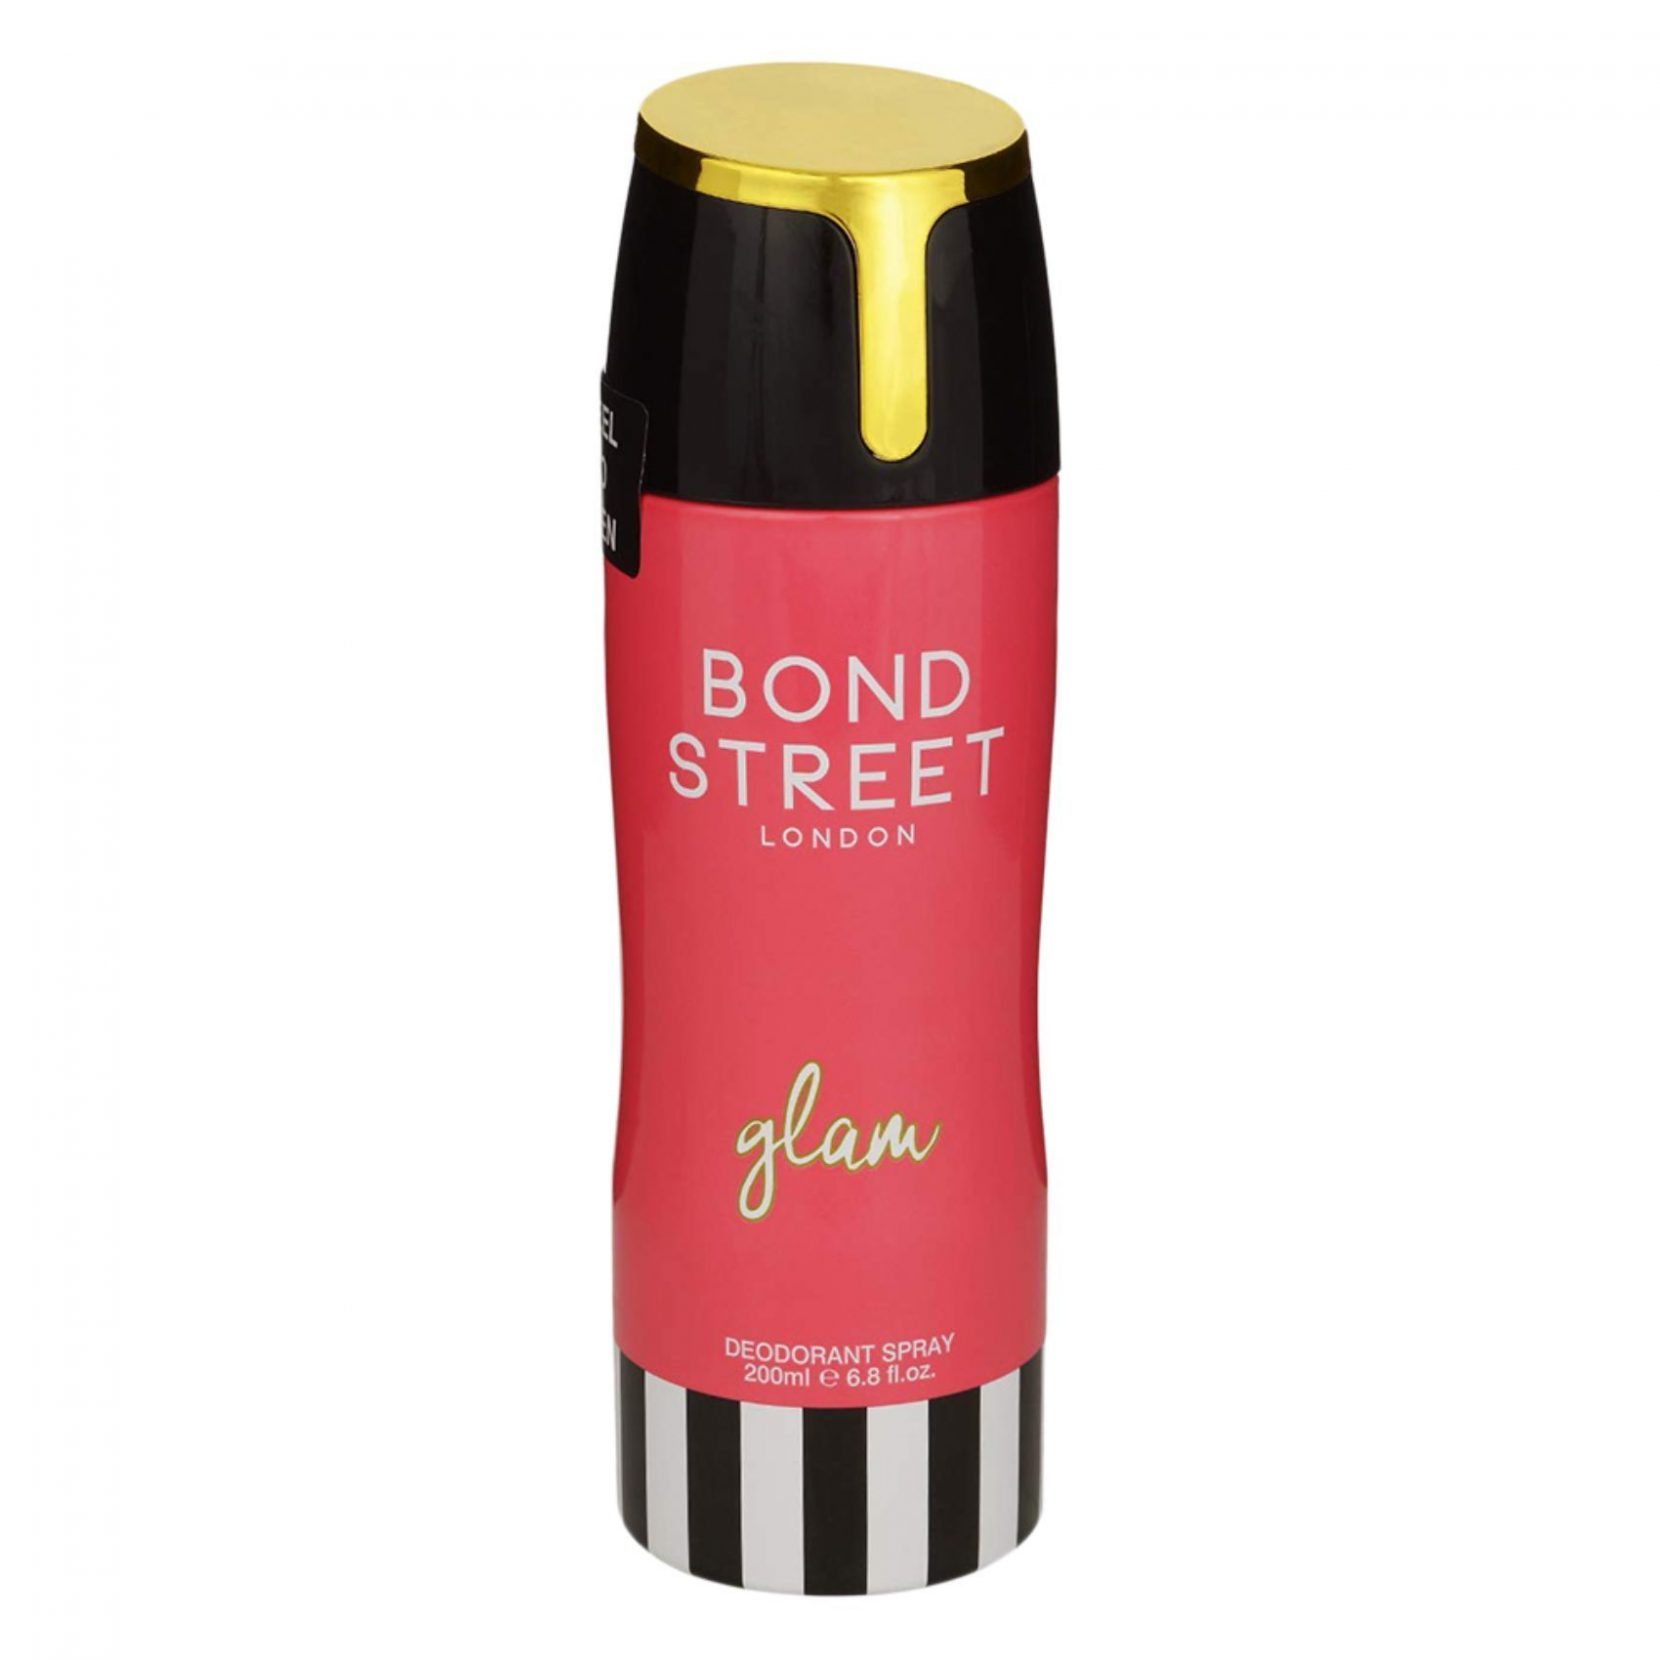 Bond Street – Glam